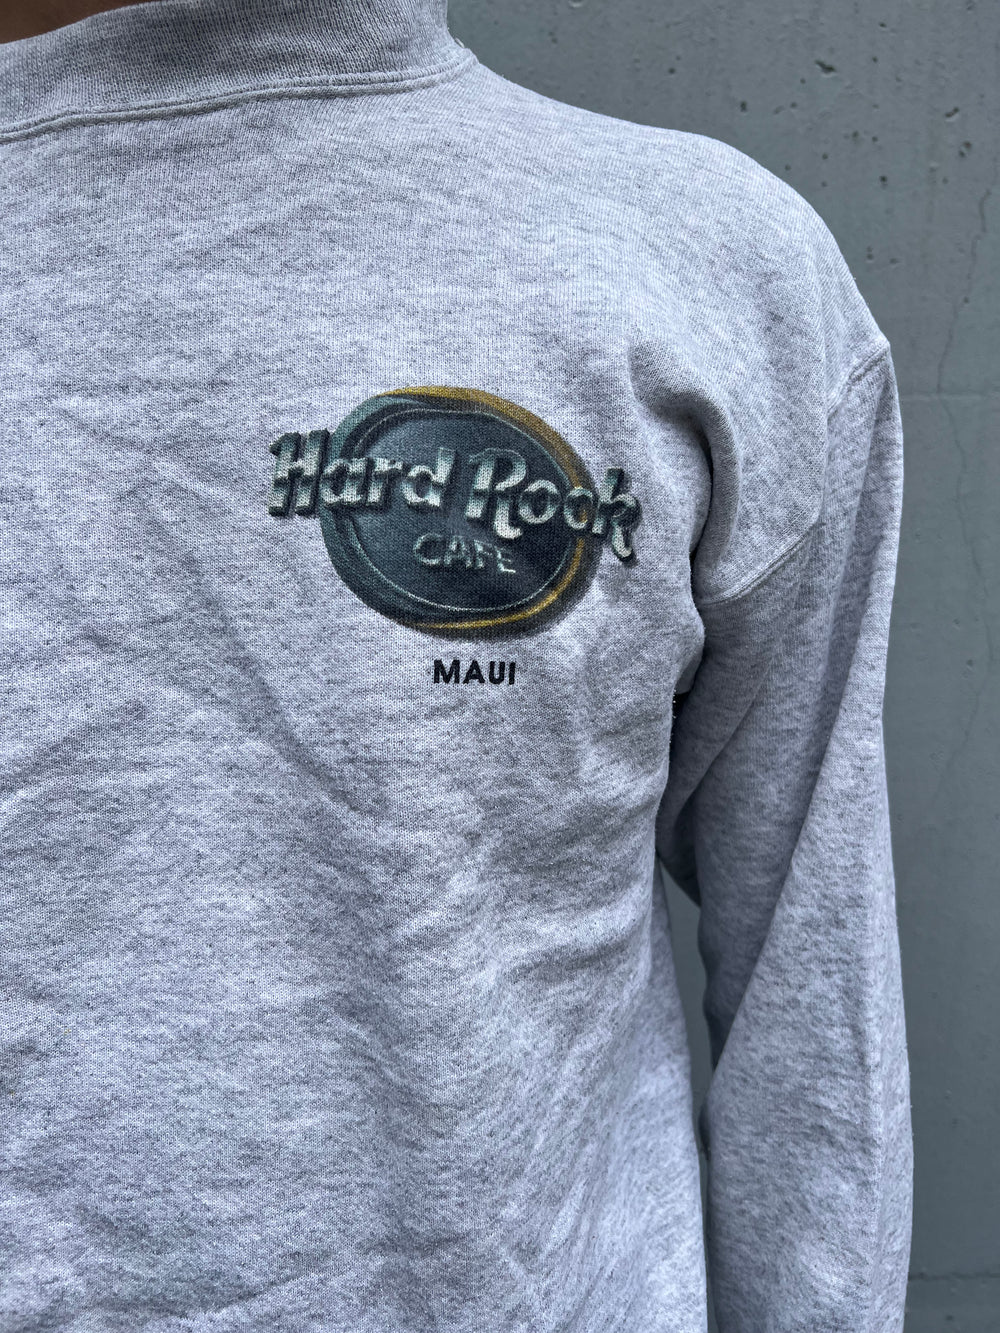 Vintage 90s Hard Rock Café Maui Sweater (M)